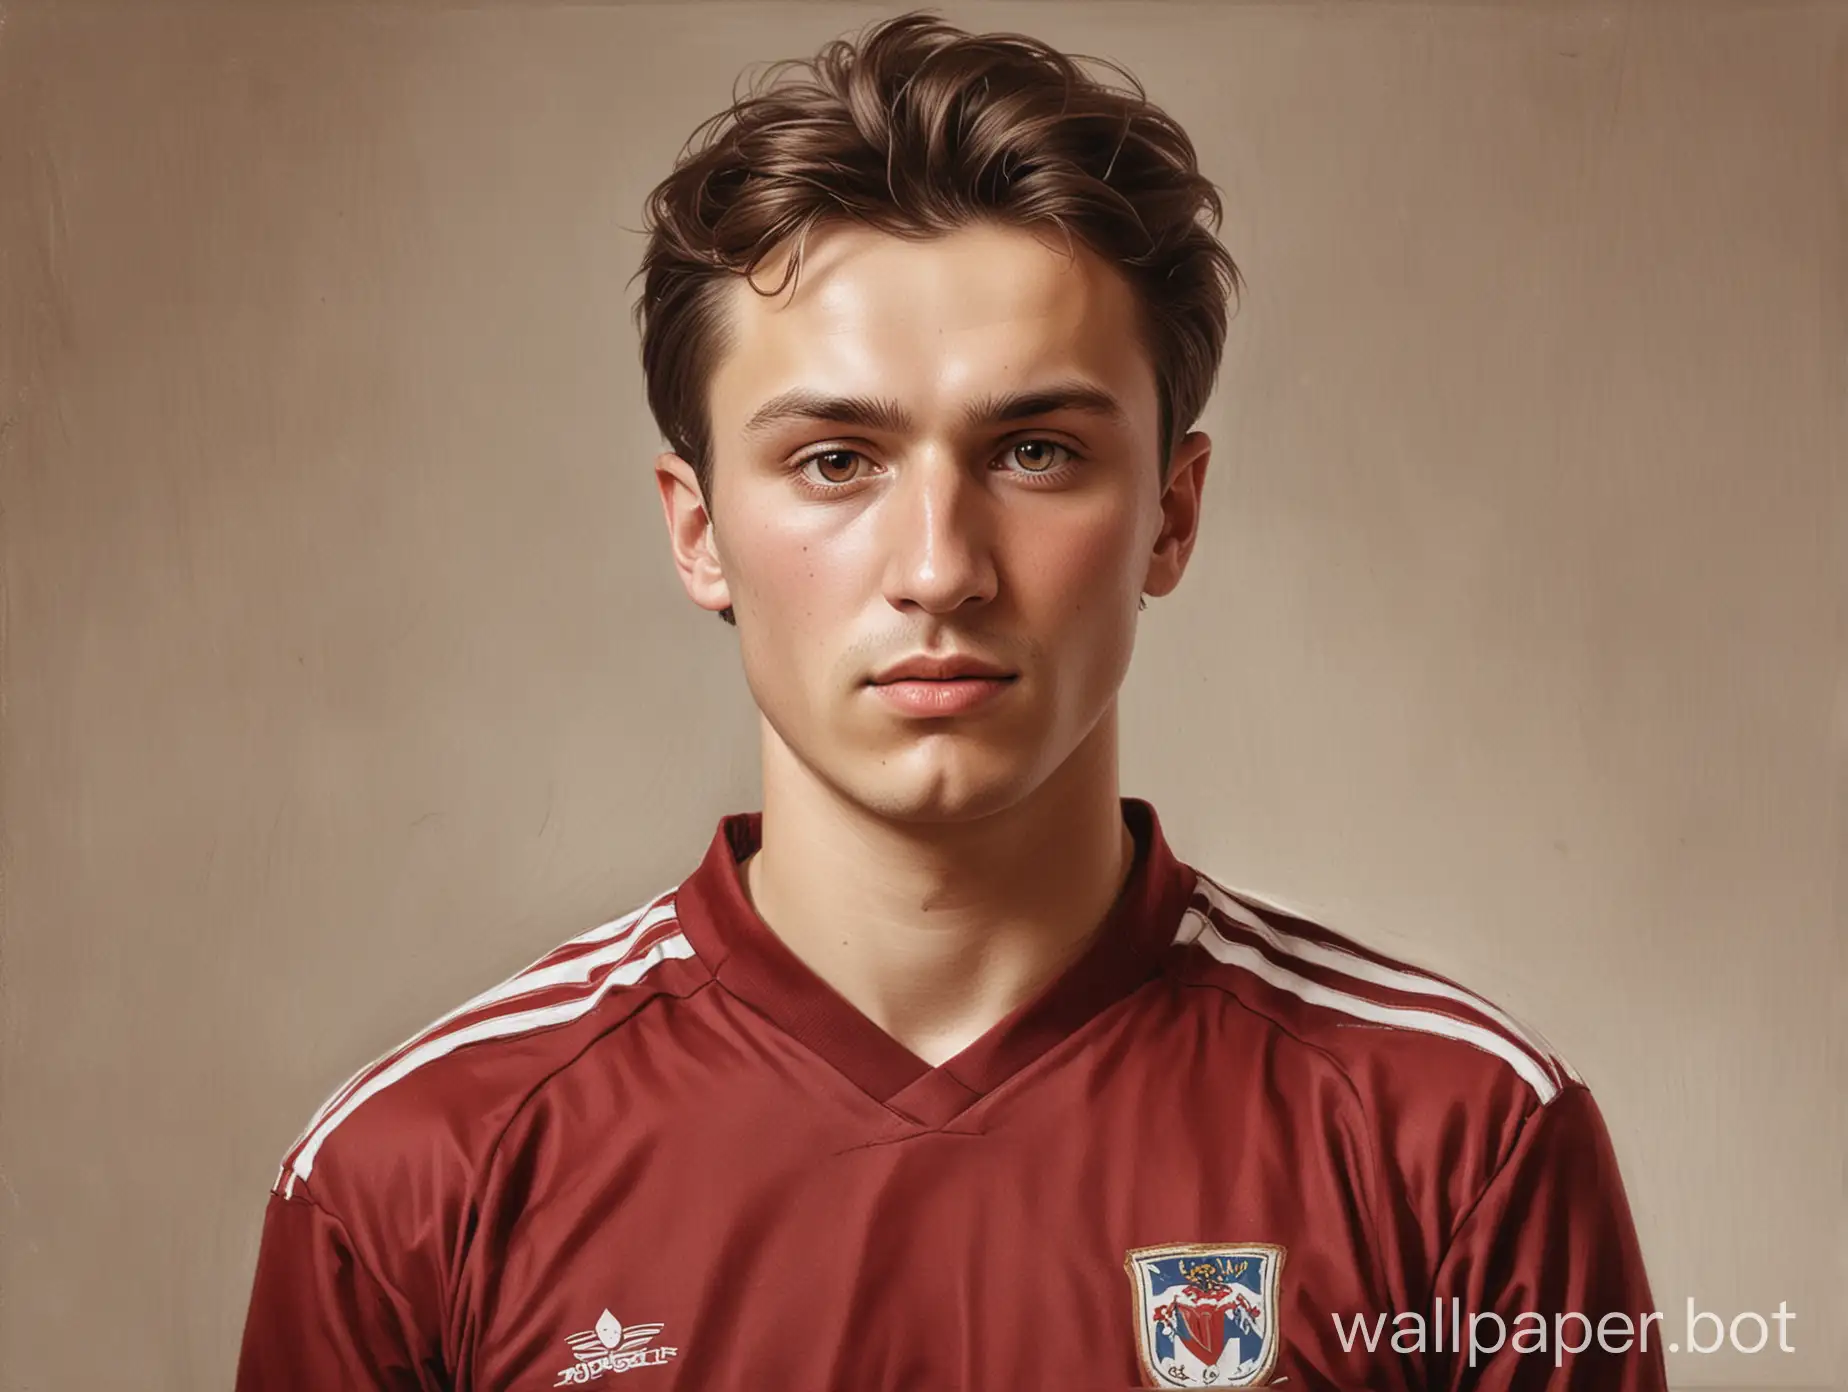 Masterpiece-Portrait-of-Din-Sokolov-a-Striking-Athlete-in-Dark-RedBrown-Soccer-Uniform